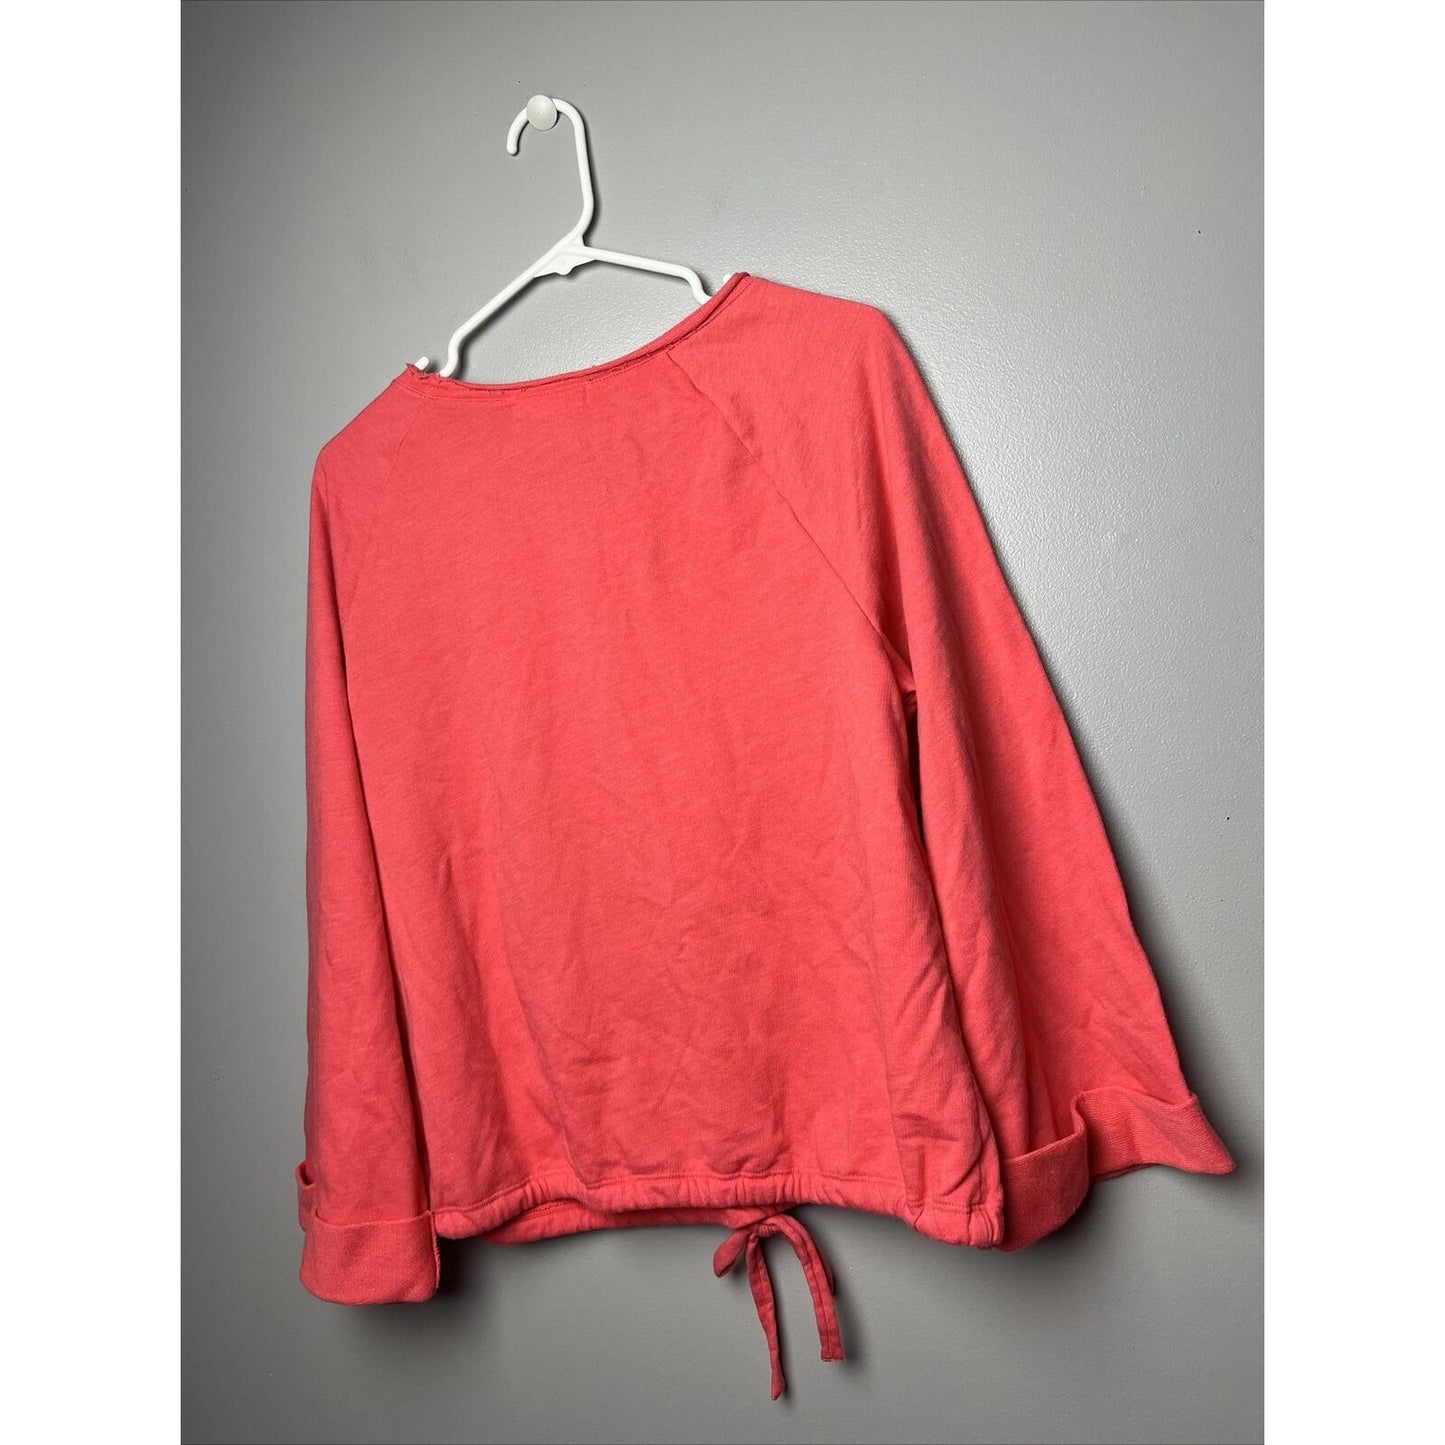 Treasure & Bond Tie Waist Sweatshirt in Red Cayenne X-Small NWT